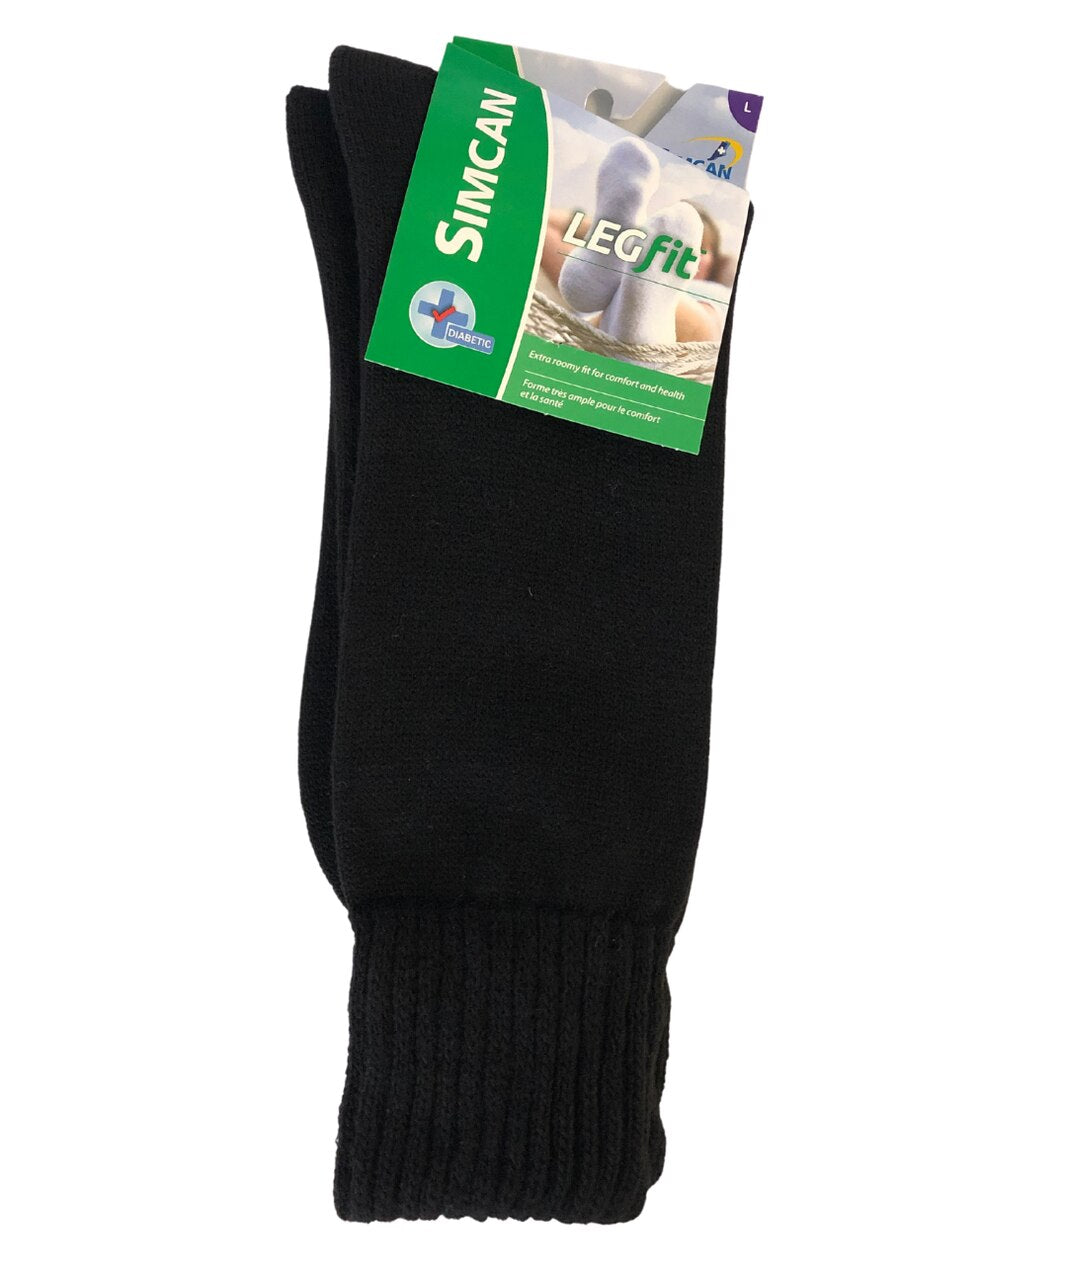 LEGfit Socks - Black